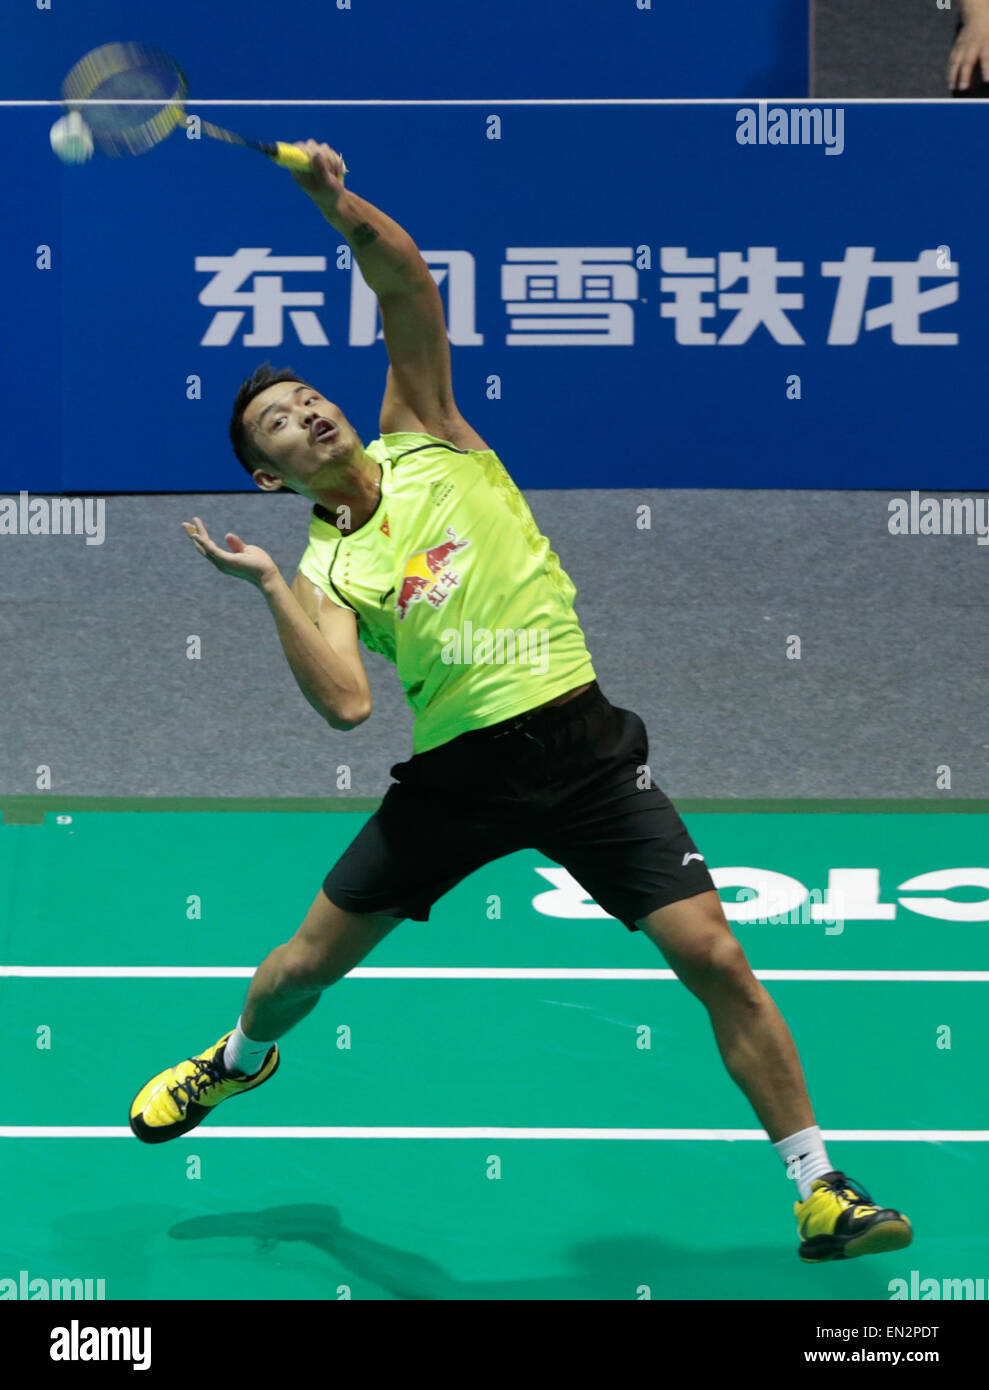 Dong Feng Citroen Badminton Asia Championships 2015 in Wuhan, China on April 26, 2015.Lin Dan of China returns to Tian Houwei of China during their men's singles final match. Stock Photo